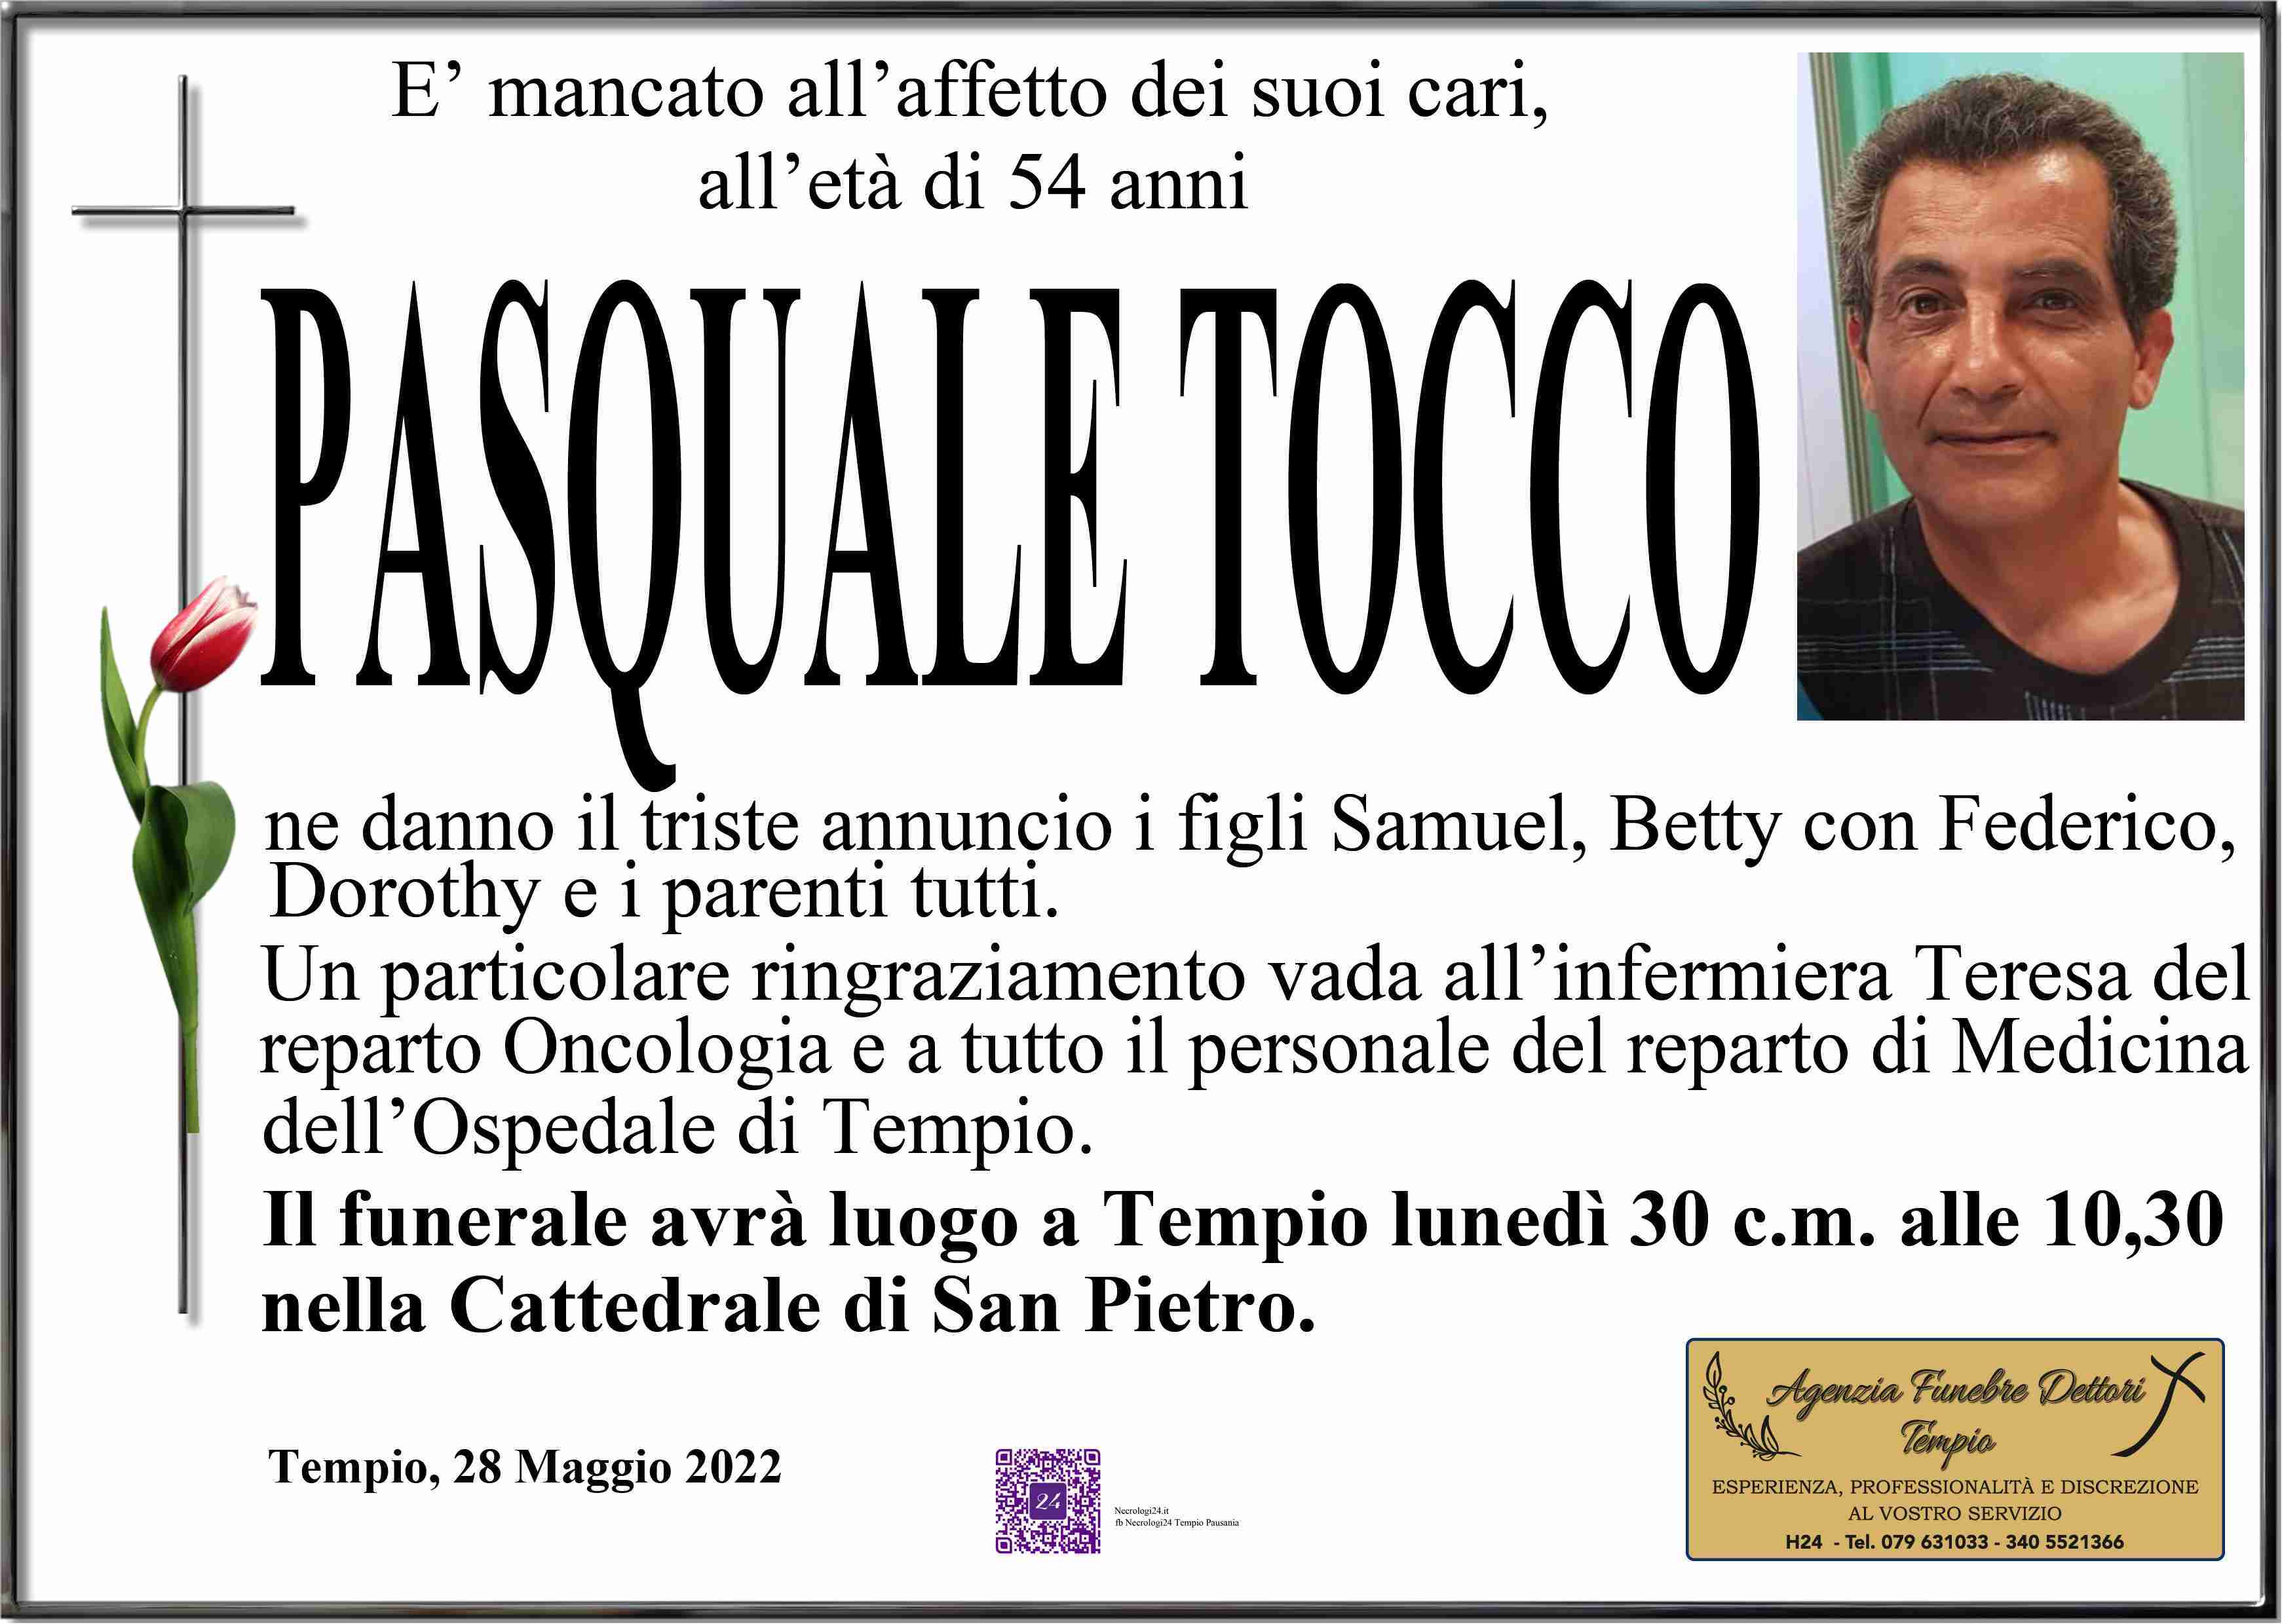 Pasquale Tocco